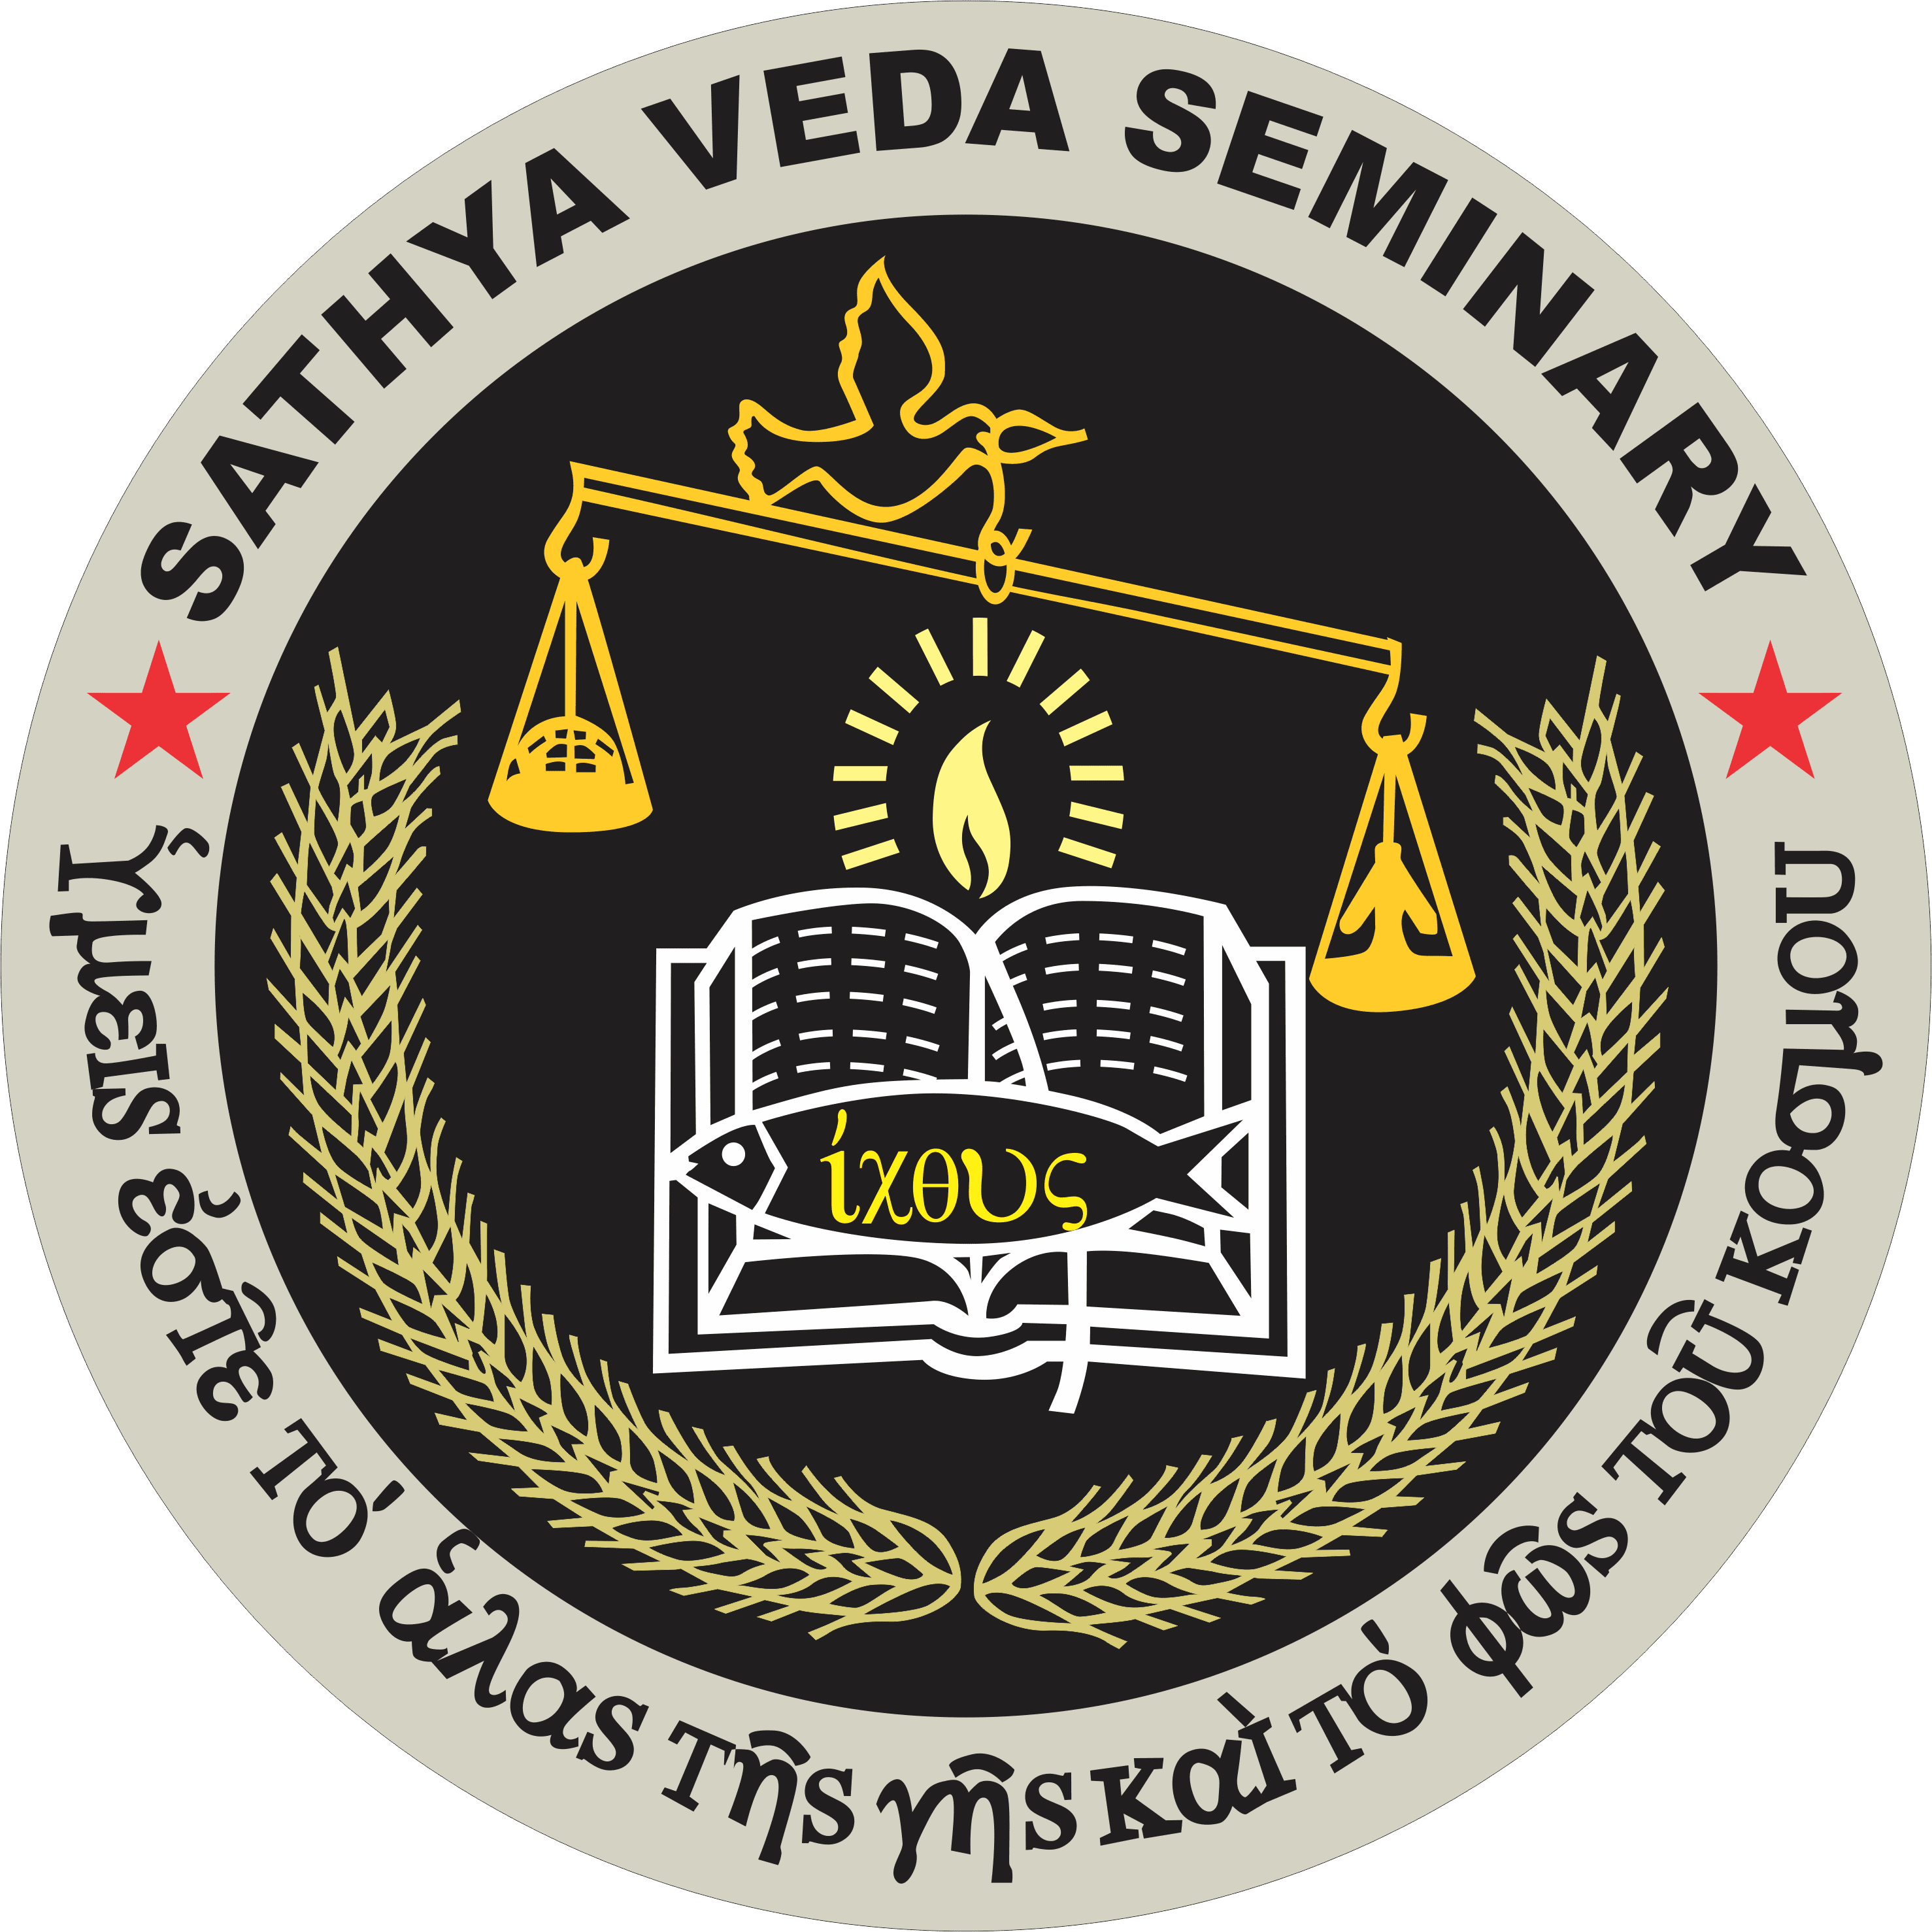 Sathya Veda Seminary